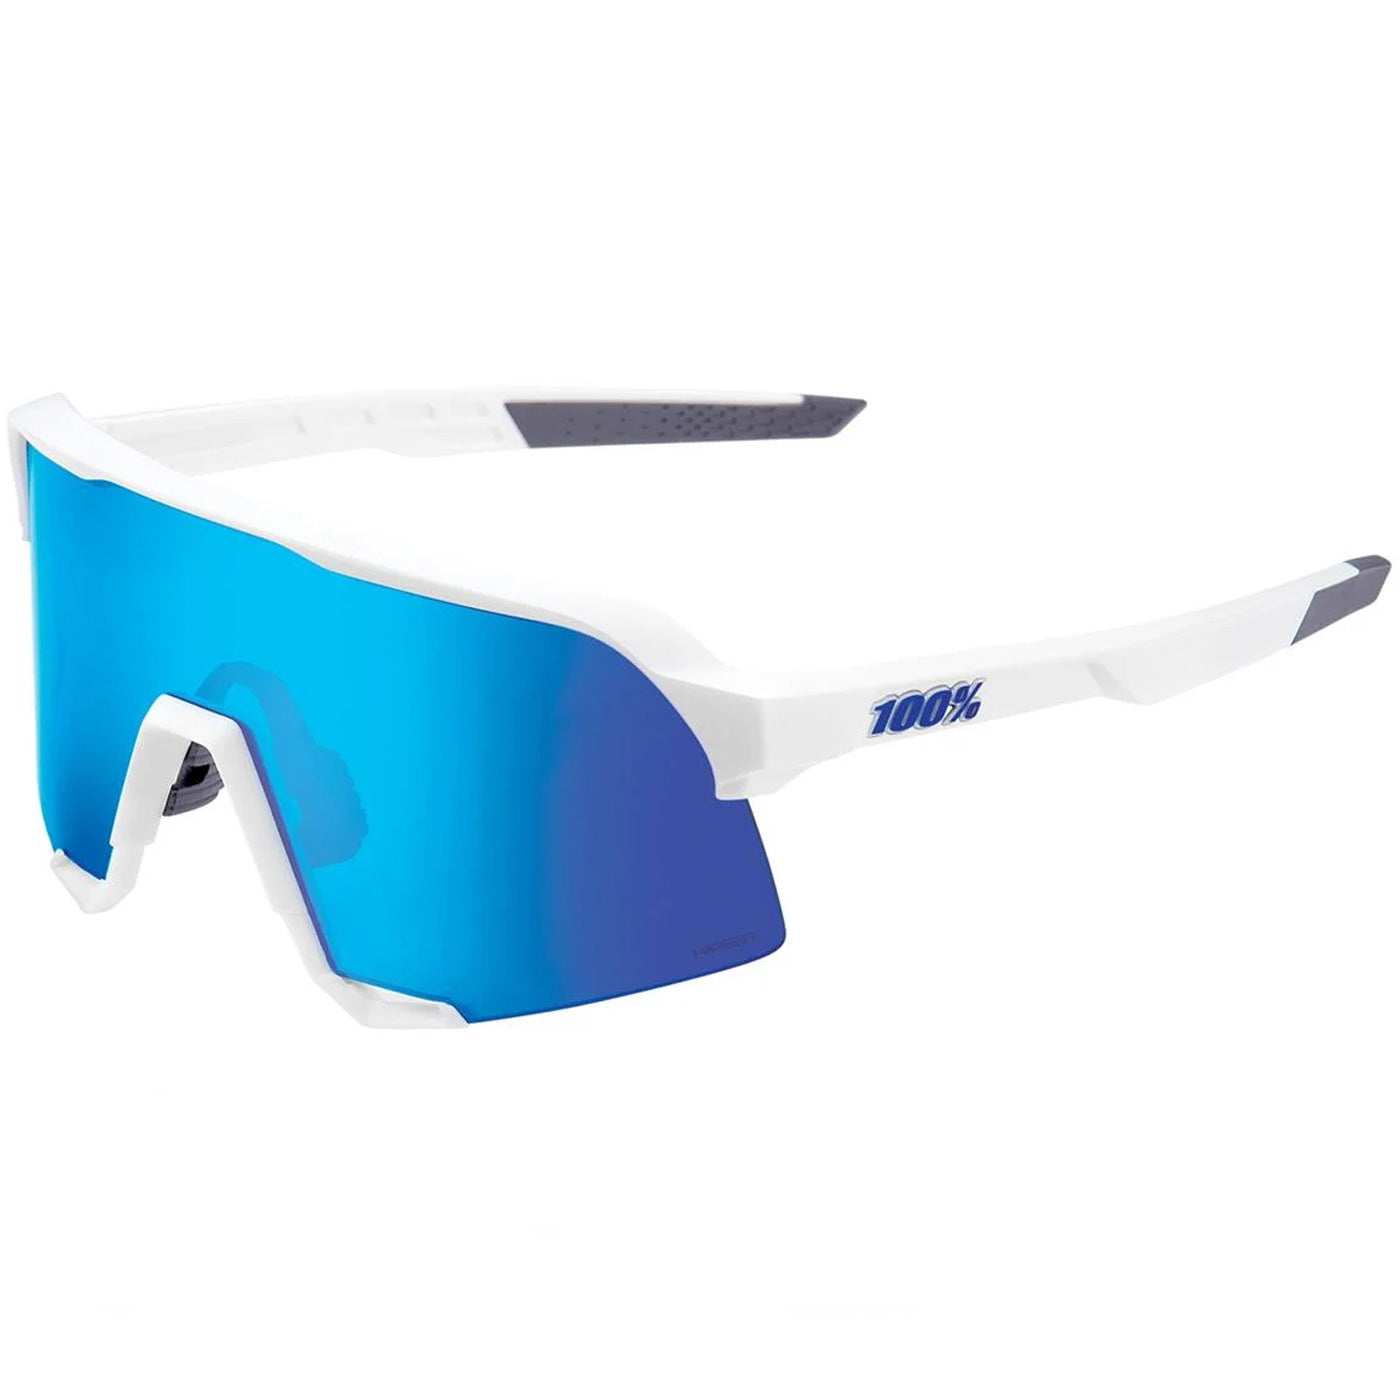 100% S3 sunglasses - Matte White HiPER Blue Mirror Lens | All4cycling